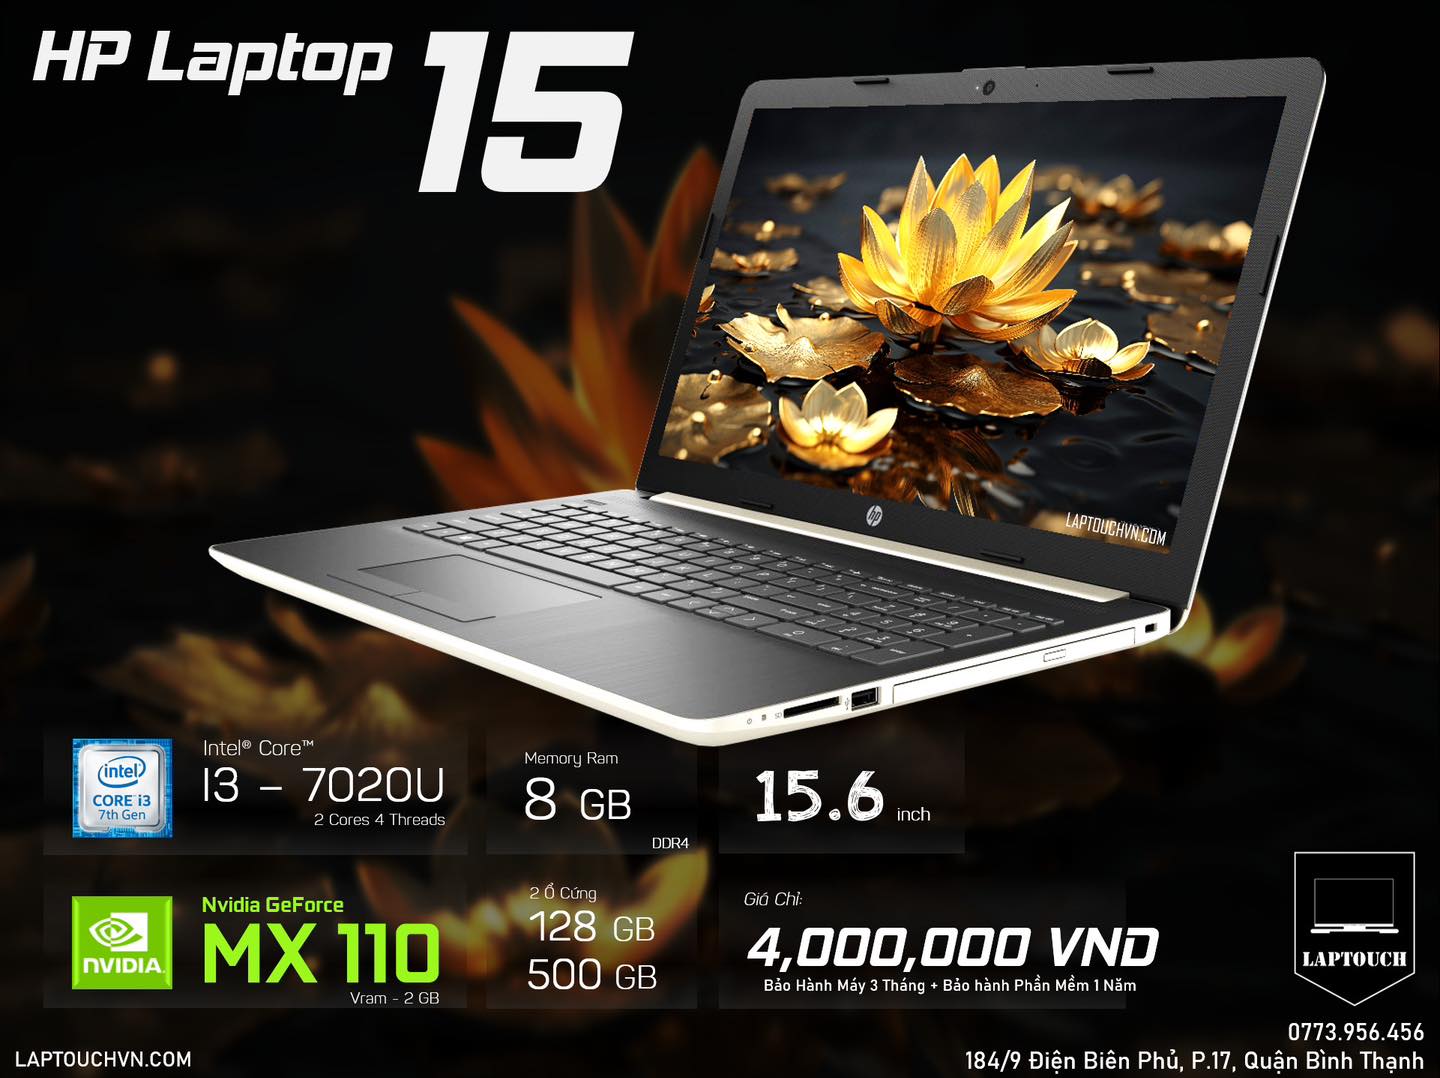 HP Laptop 15 [ GeForce MX 110 ]